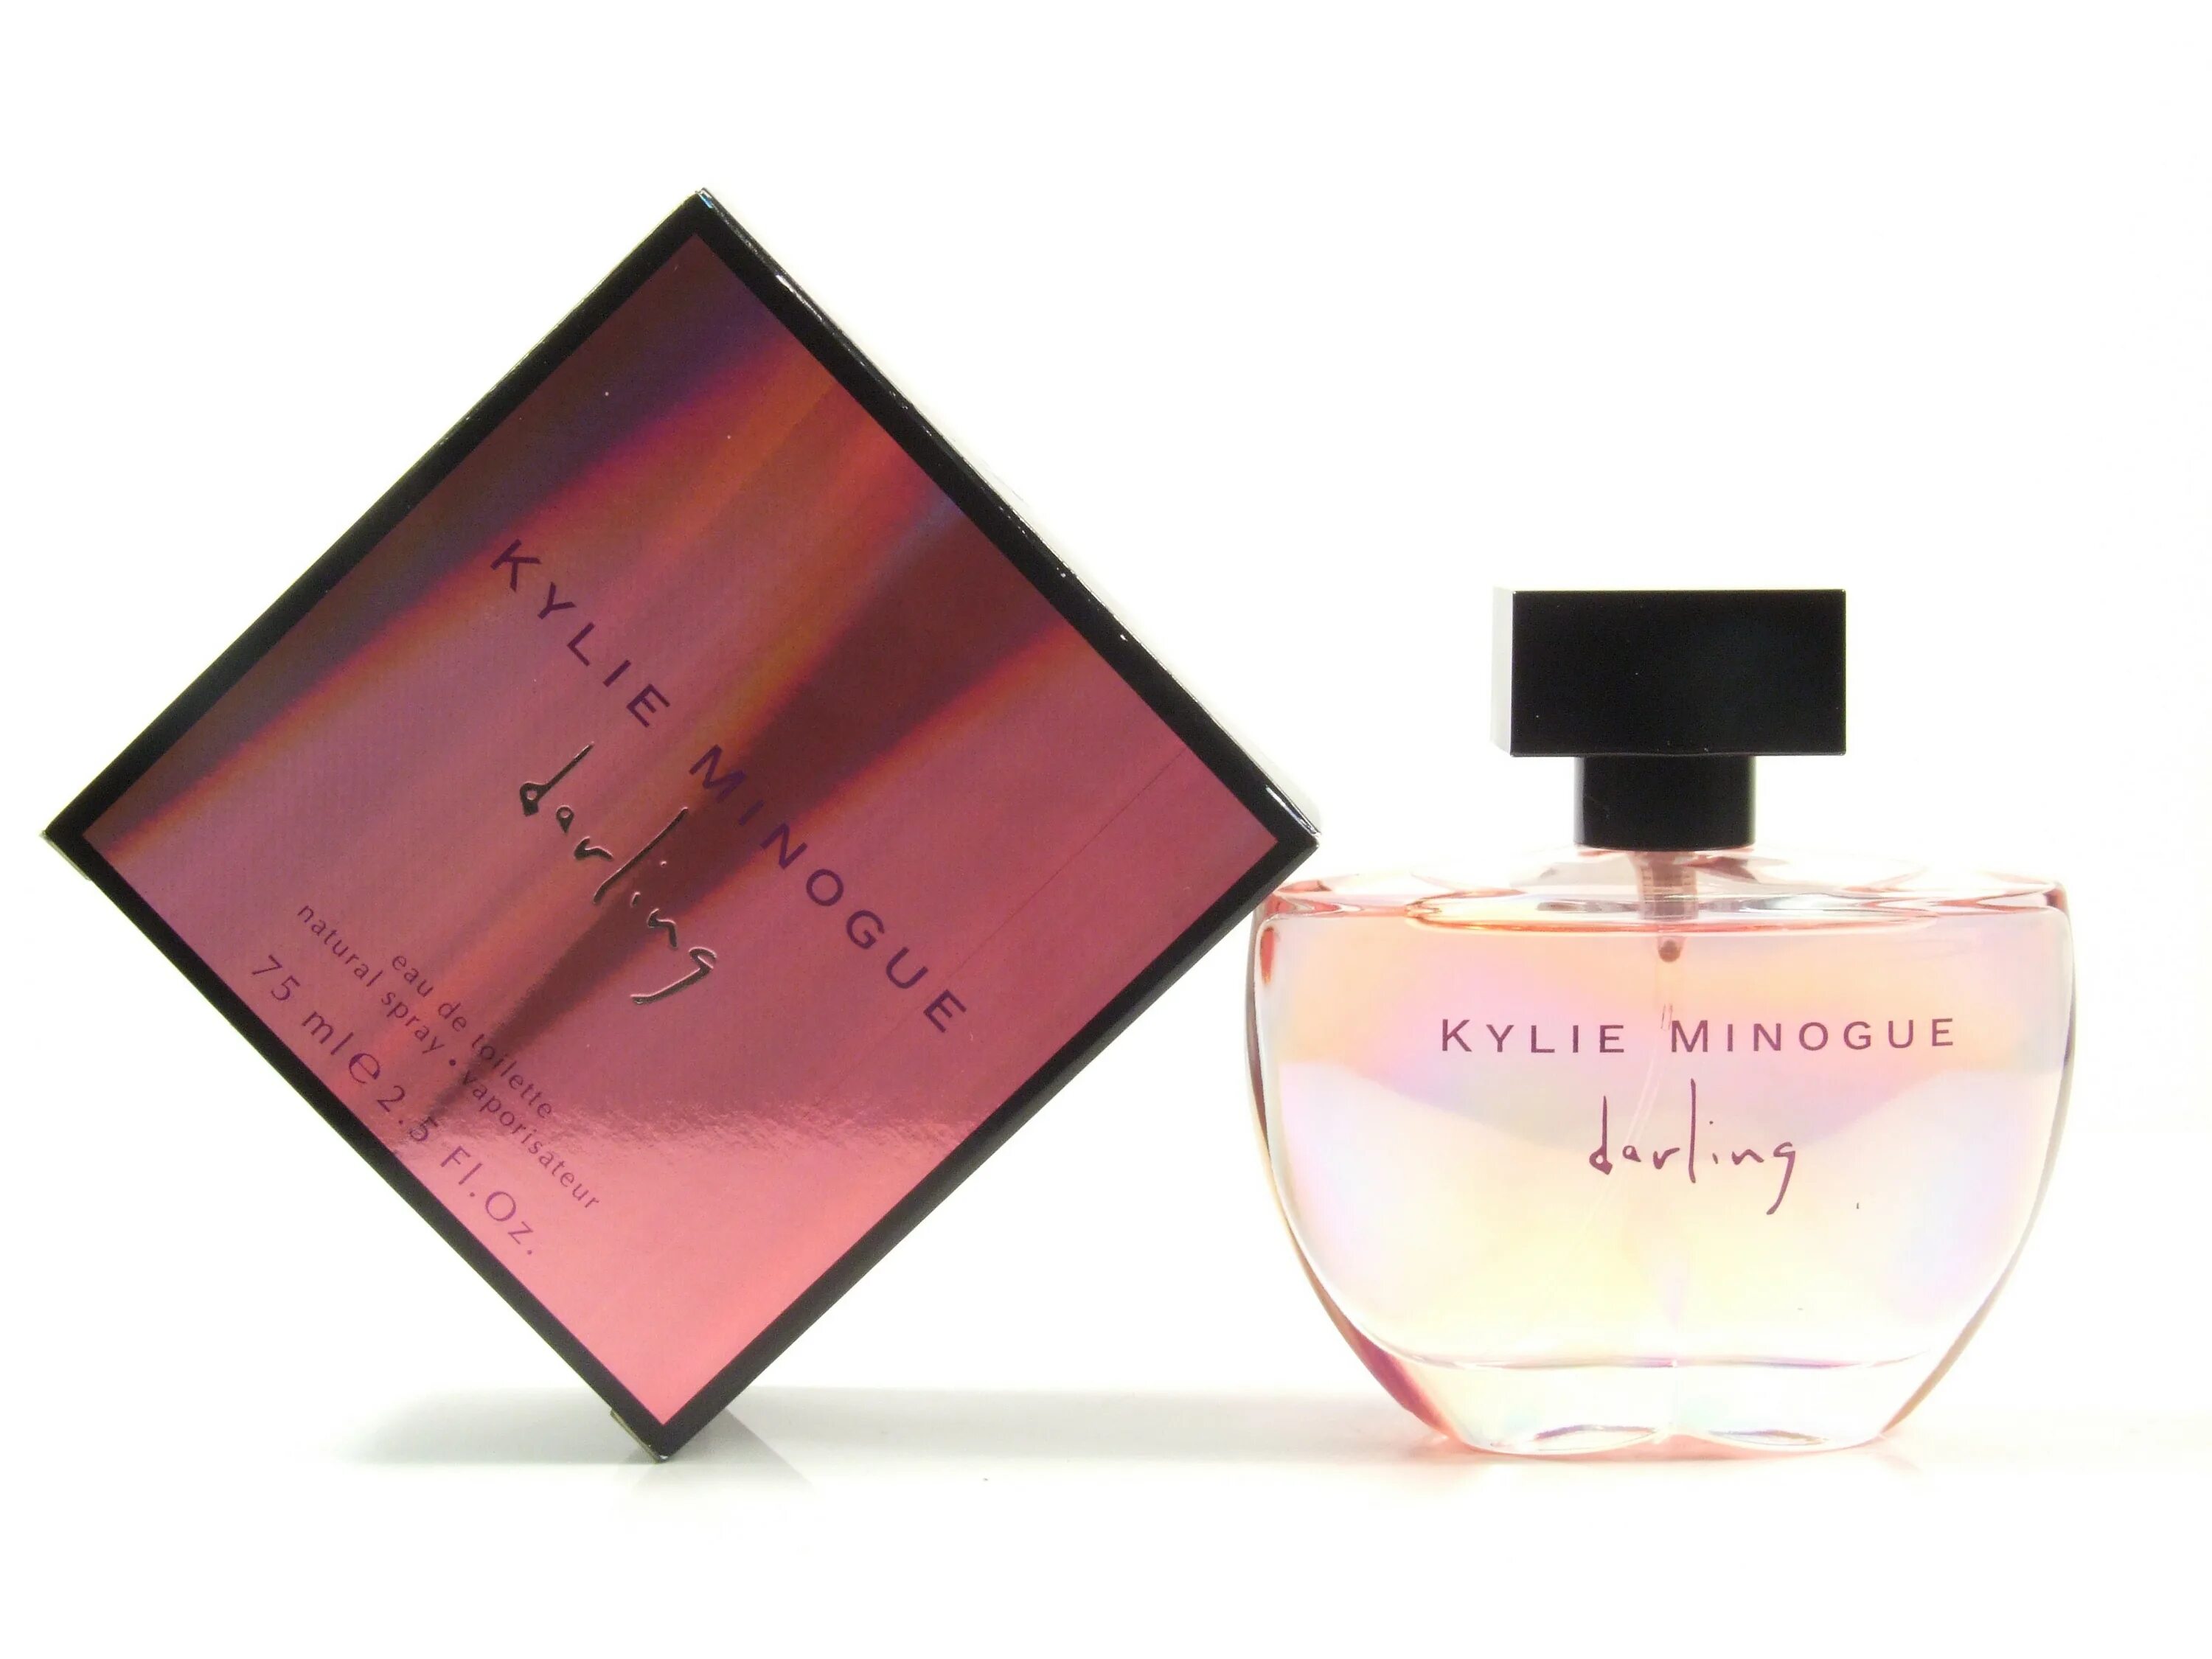 Kylie Minogue Парфюм Darling. Духи Дарлинг розовые.